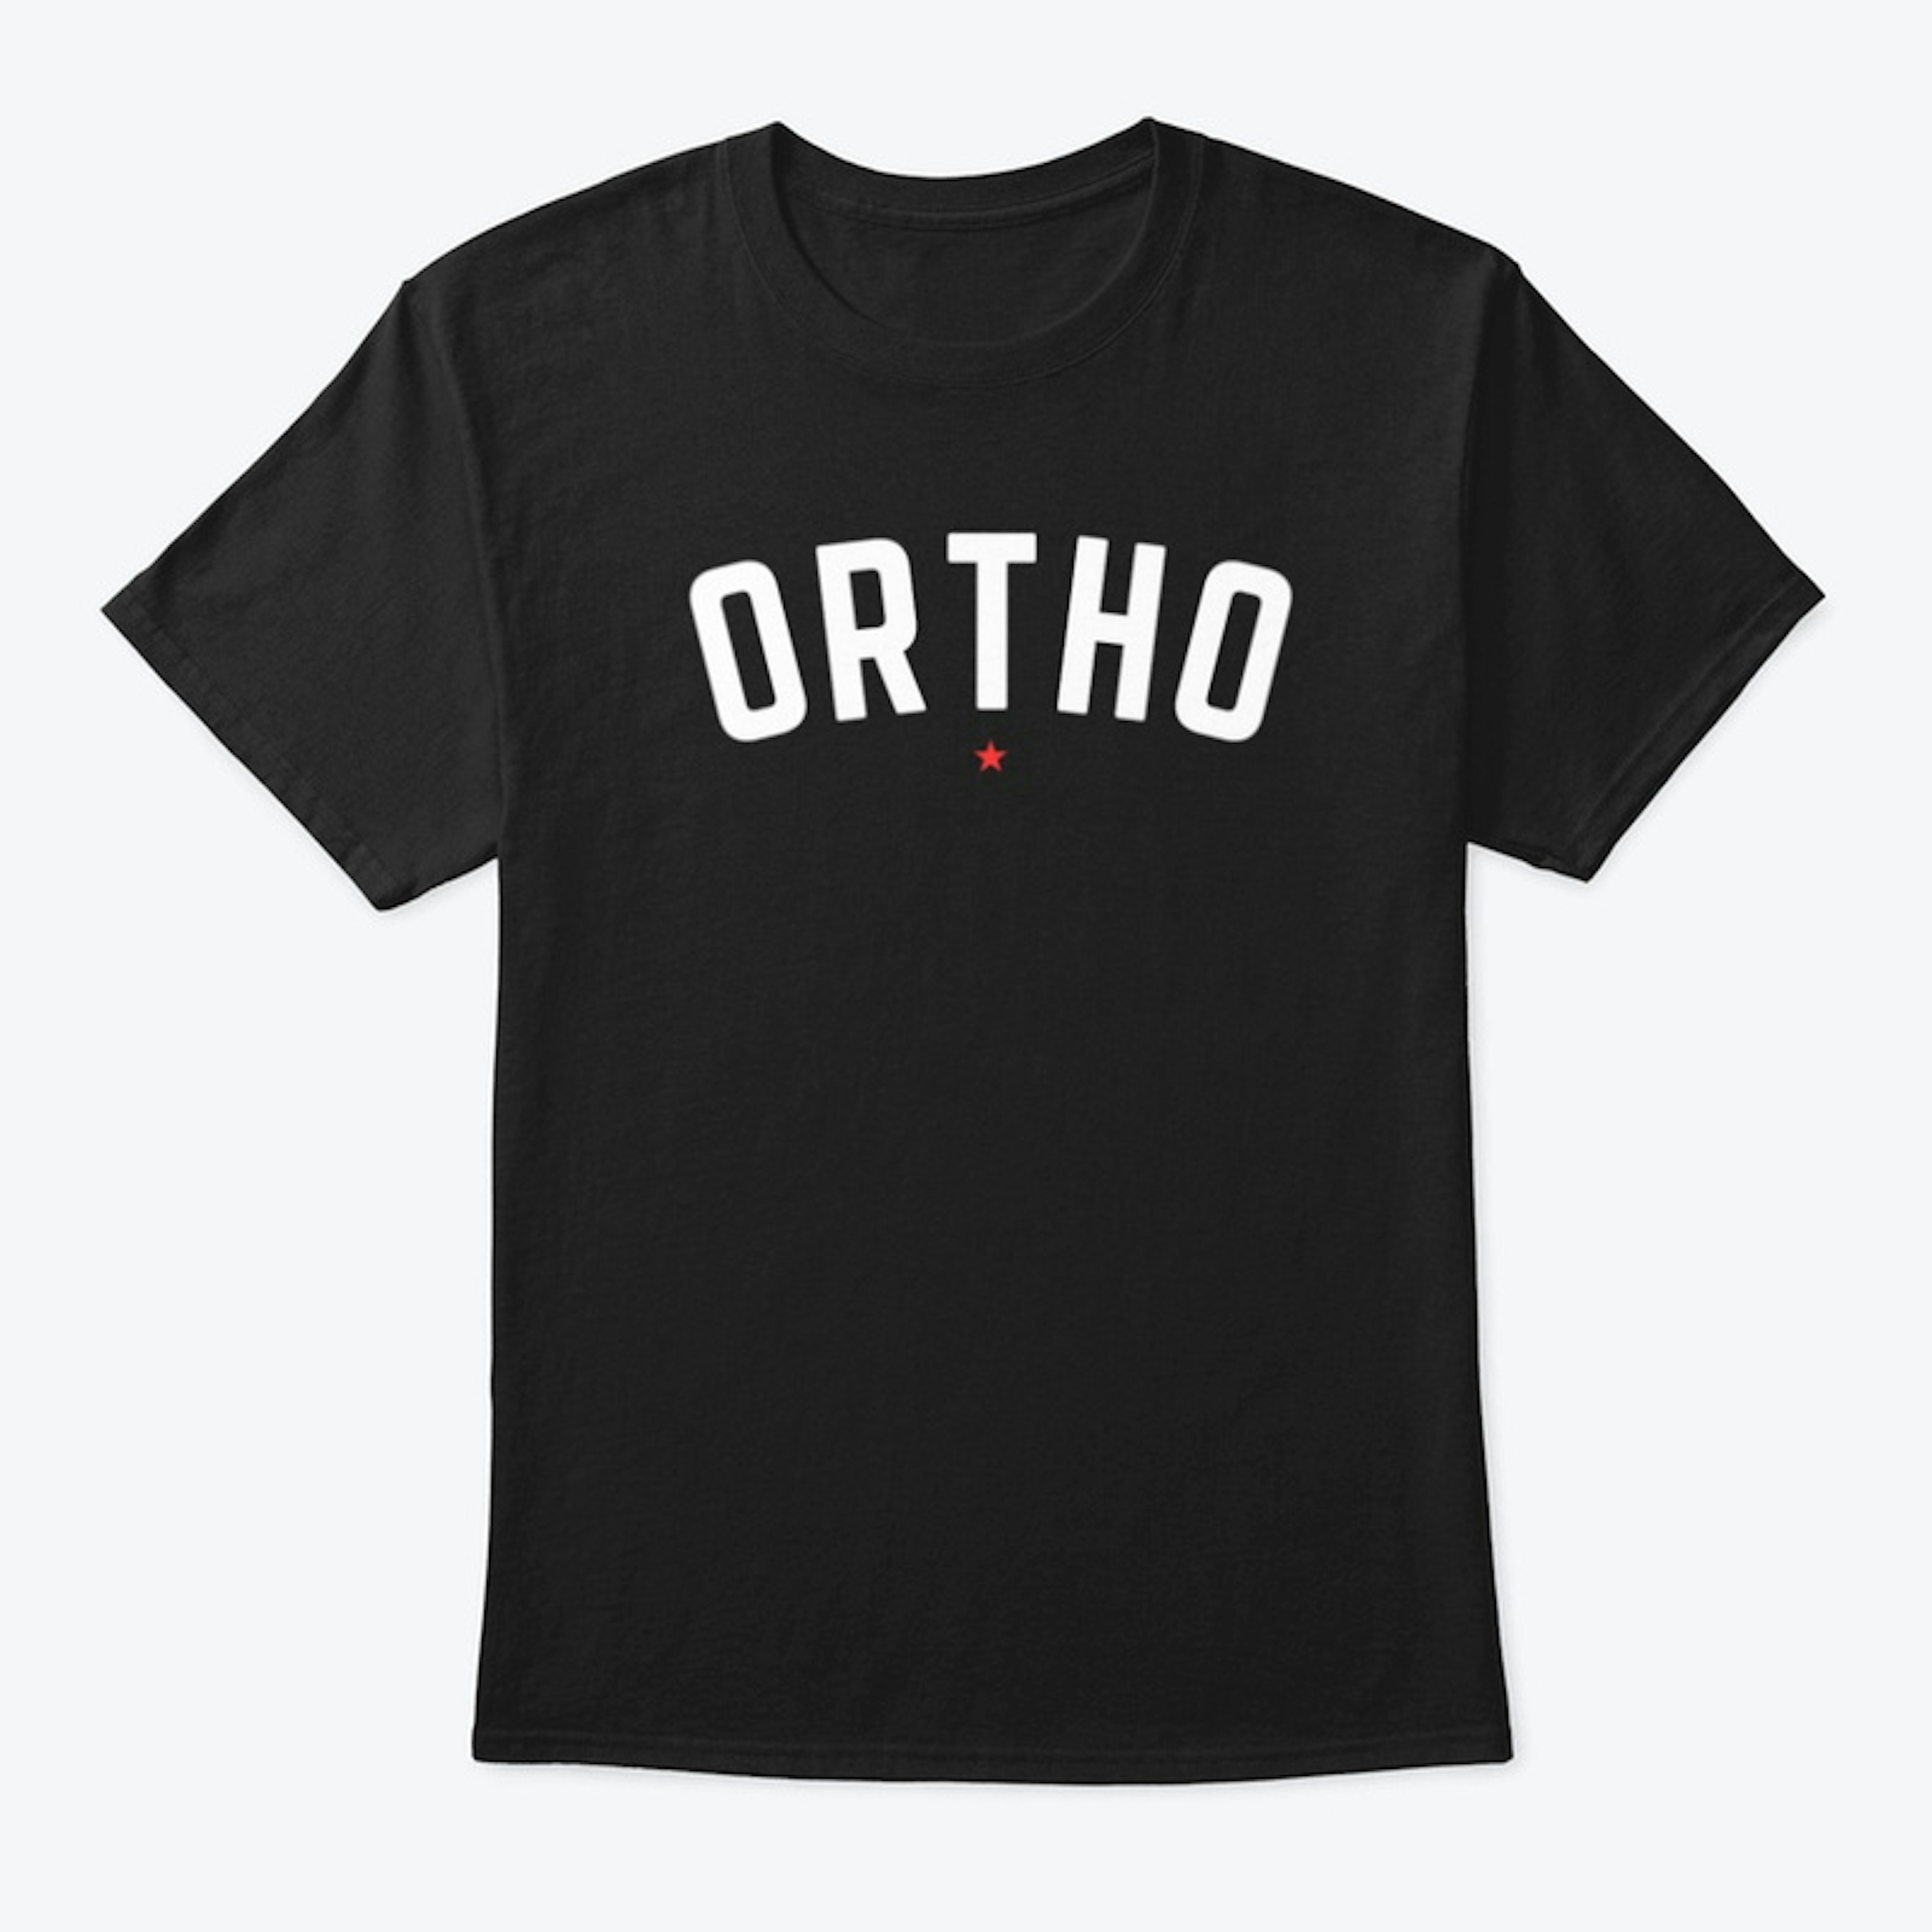 Ortho Premium Black T-shirt